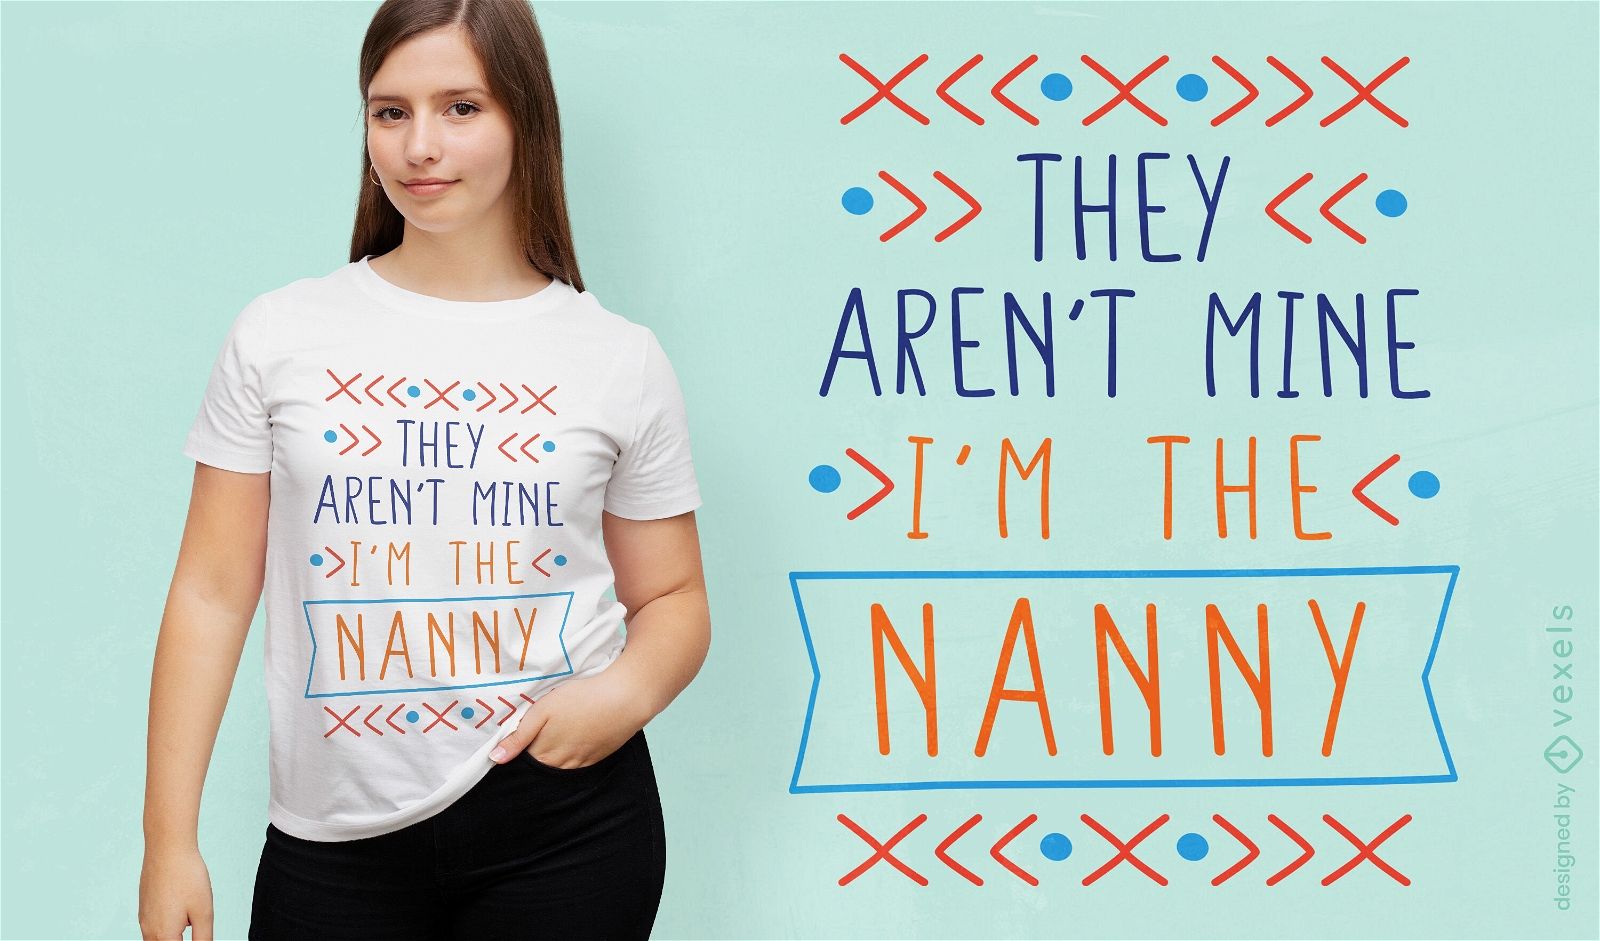 Humorvolles Nanny-Statement-T-Shirt-Design